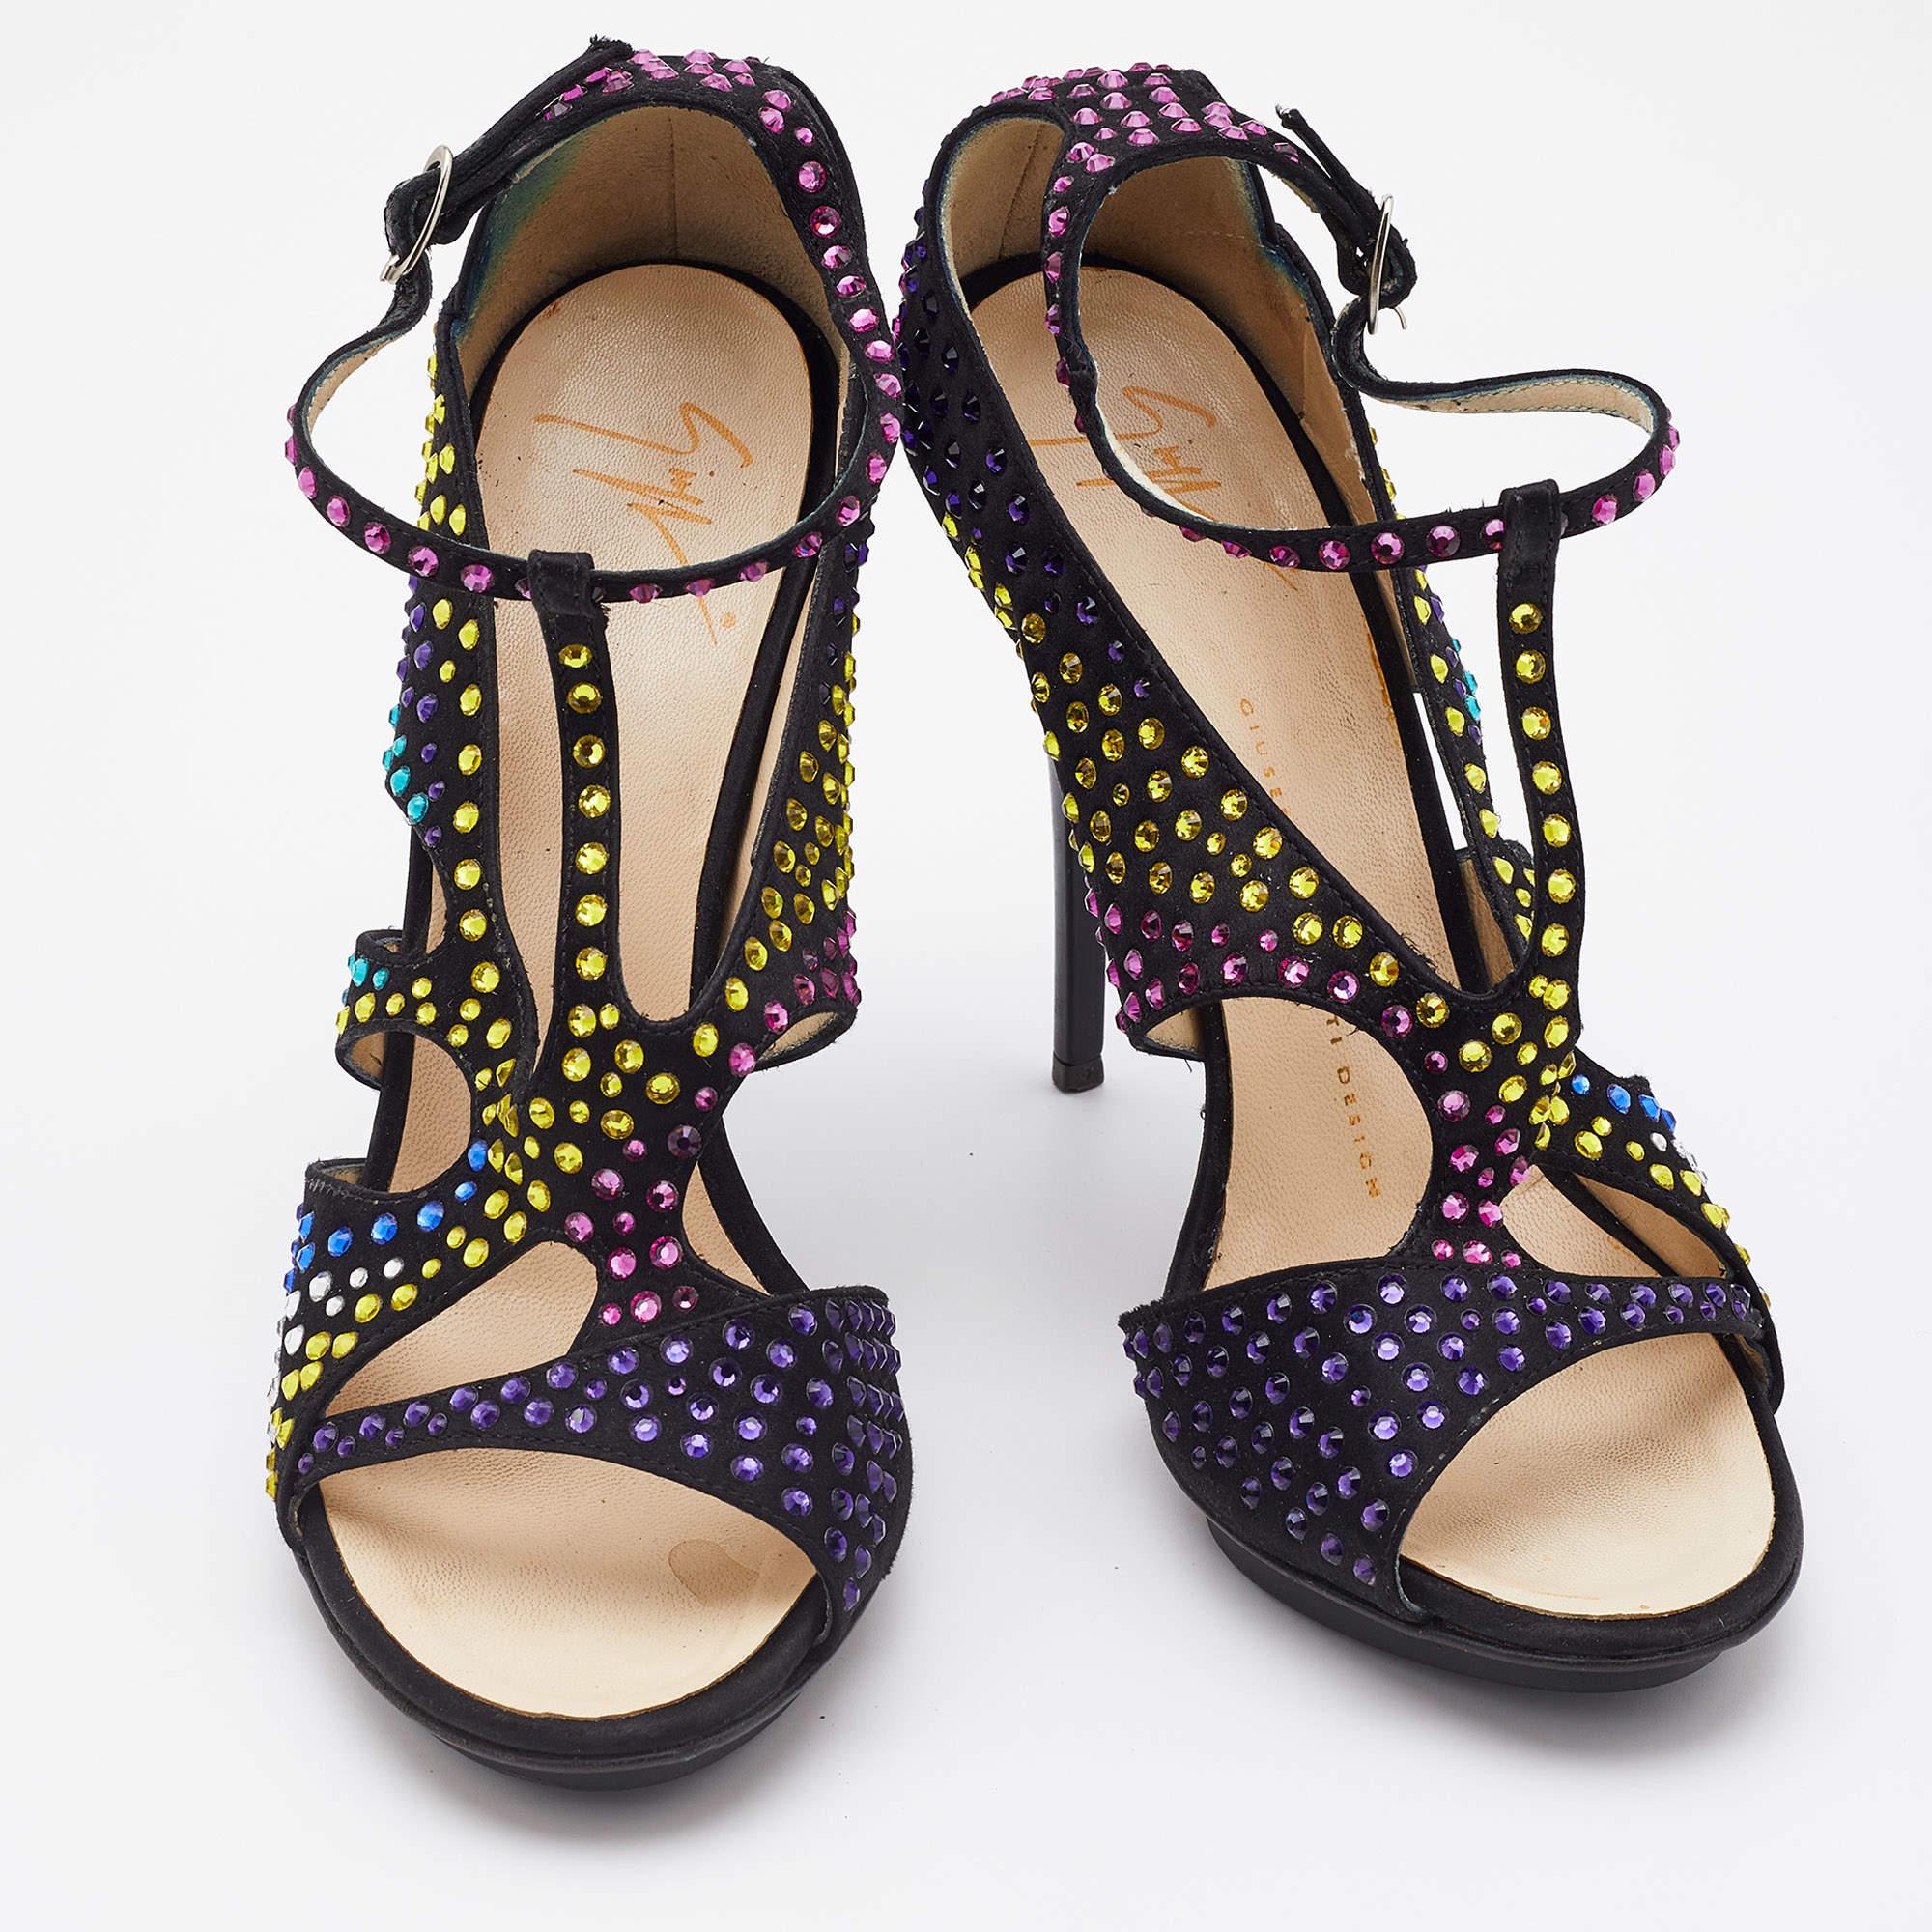 Giuseppe Zanotti Black Satin Crystal Embellished Strappy Sandals Size 38 In Good Condition For Sale In Dubai, Al Qouz 2